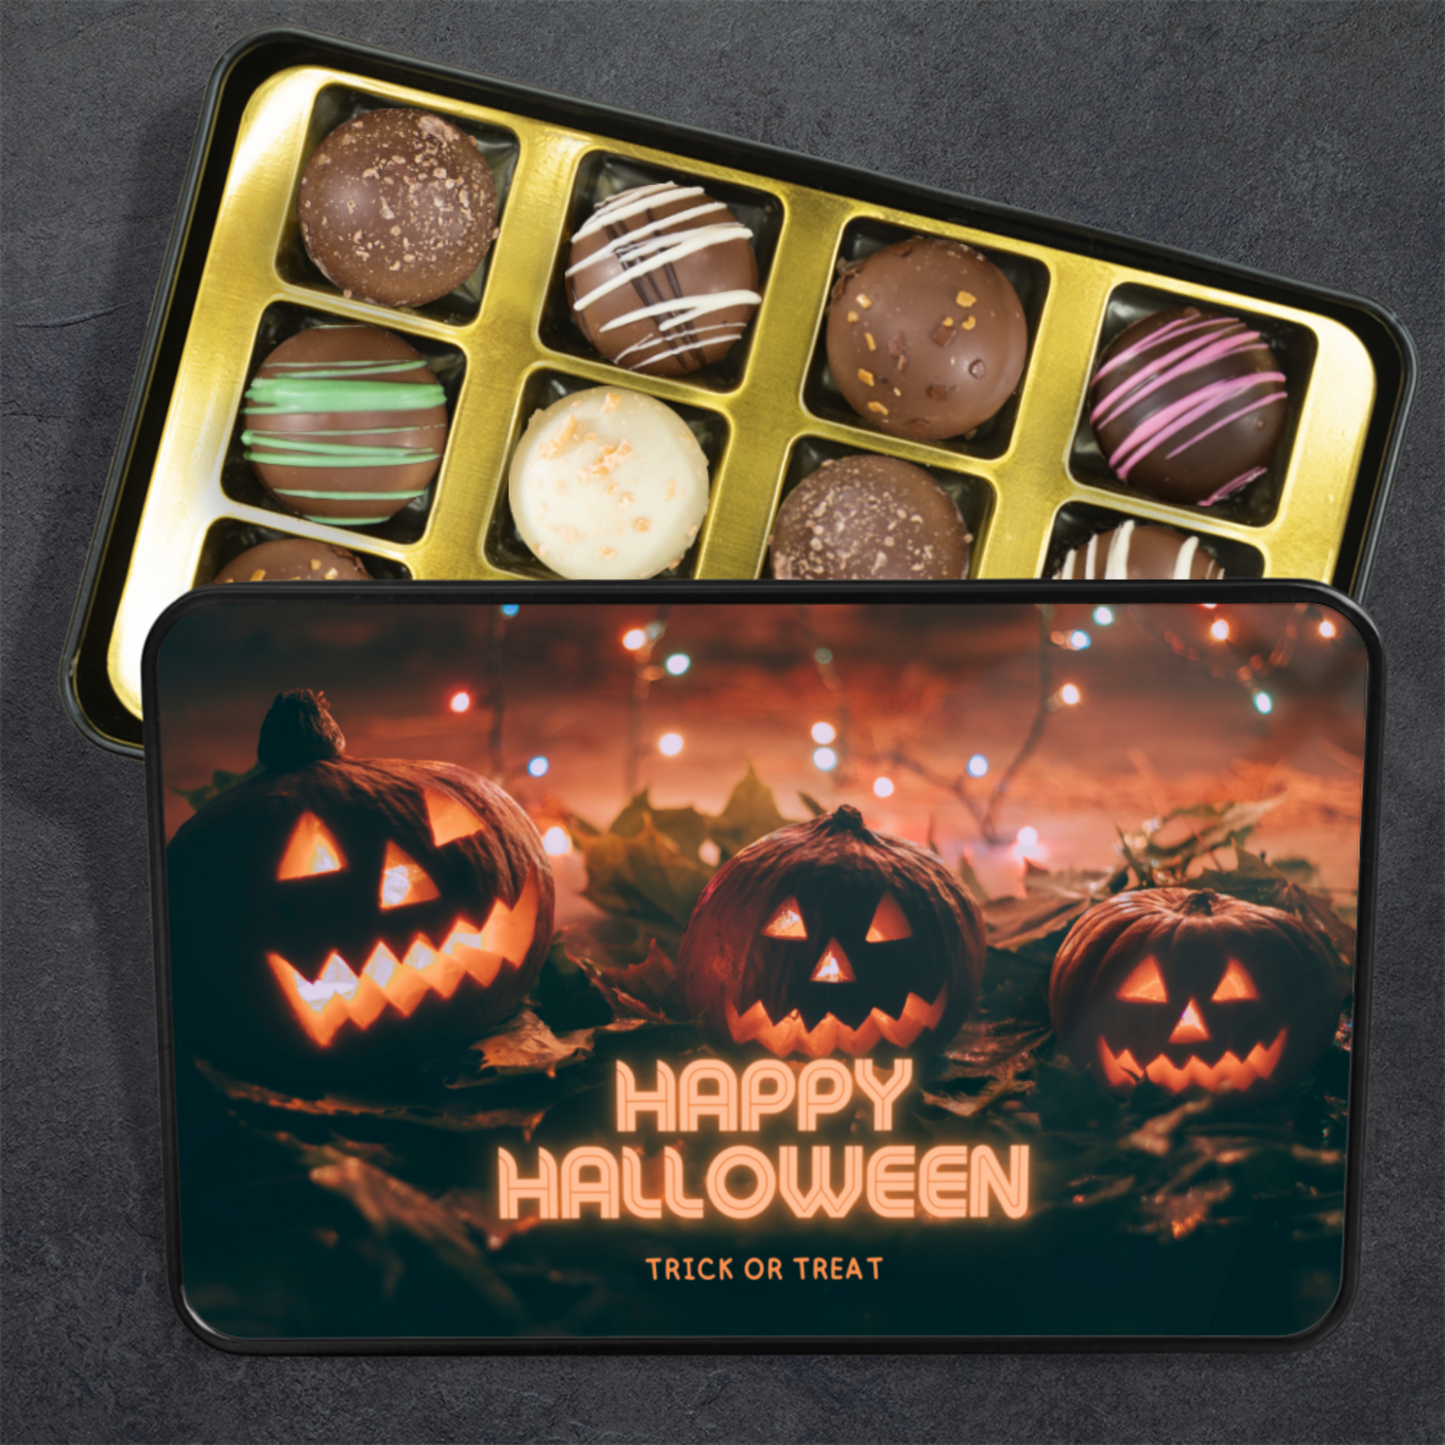 Trick or Treat Halloween Candy Gift Box, Chocolate Truffles - Mardonyx Candy